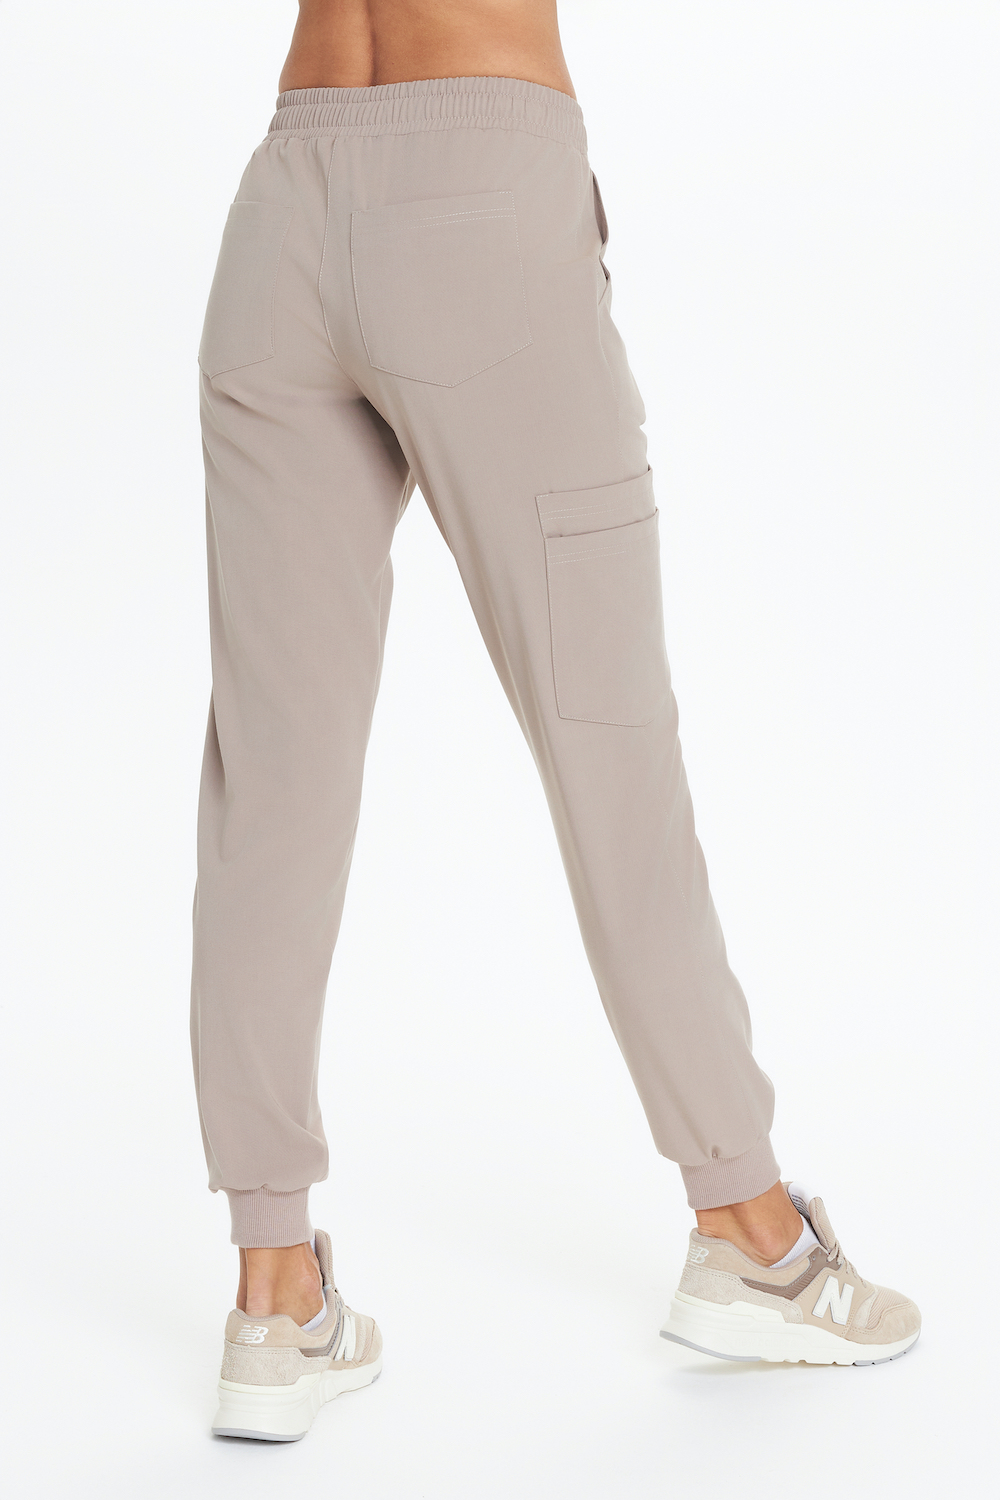 Care+Wear CareWear 12-Pocket Jogger Scrub Pants for Women – Moisture  Wicking, Ultra-Soft, Wrinkle-Resistant Medical Scrub Pants